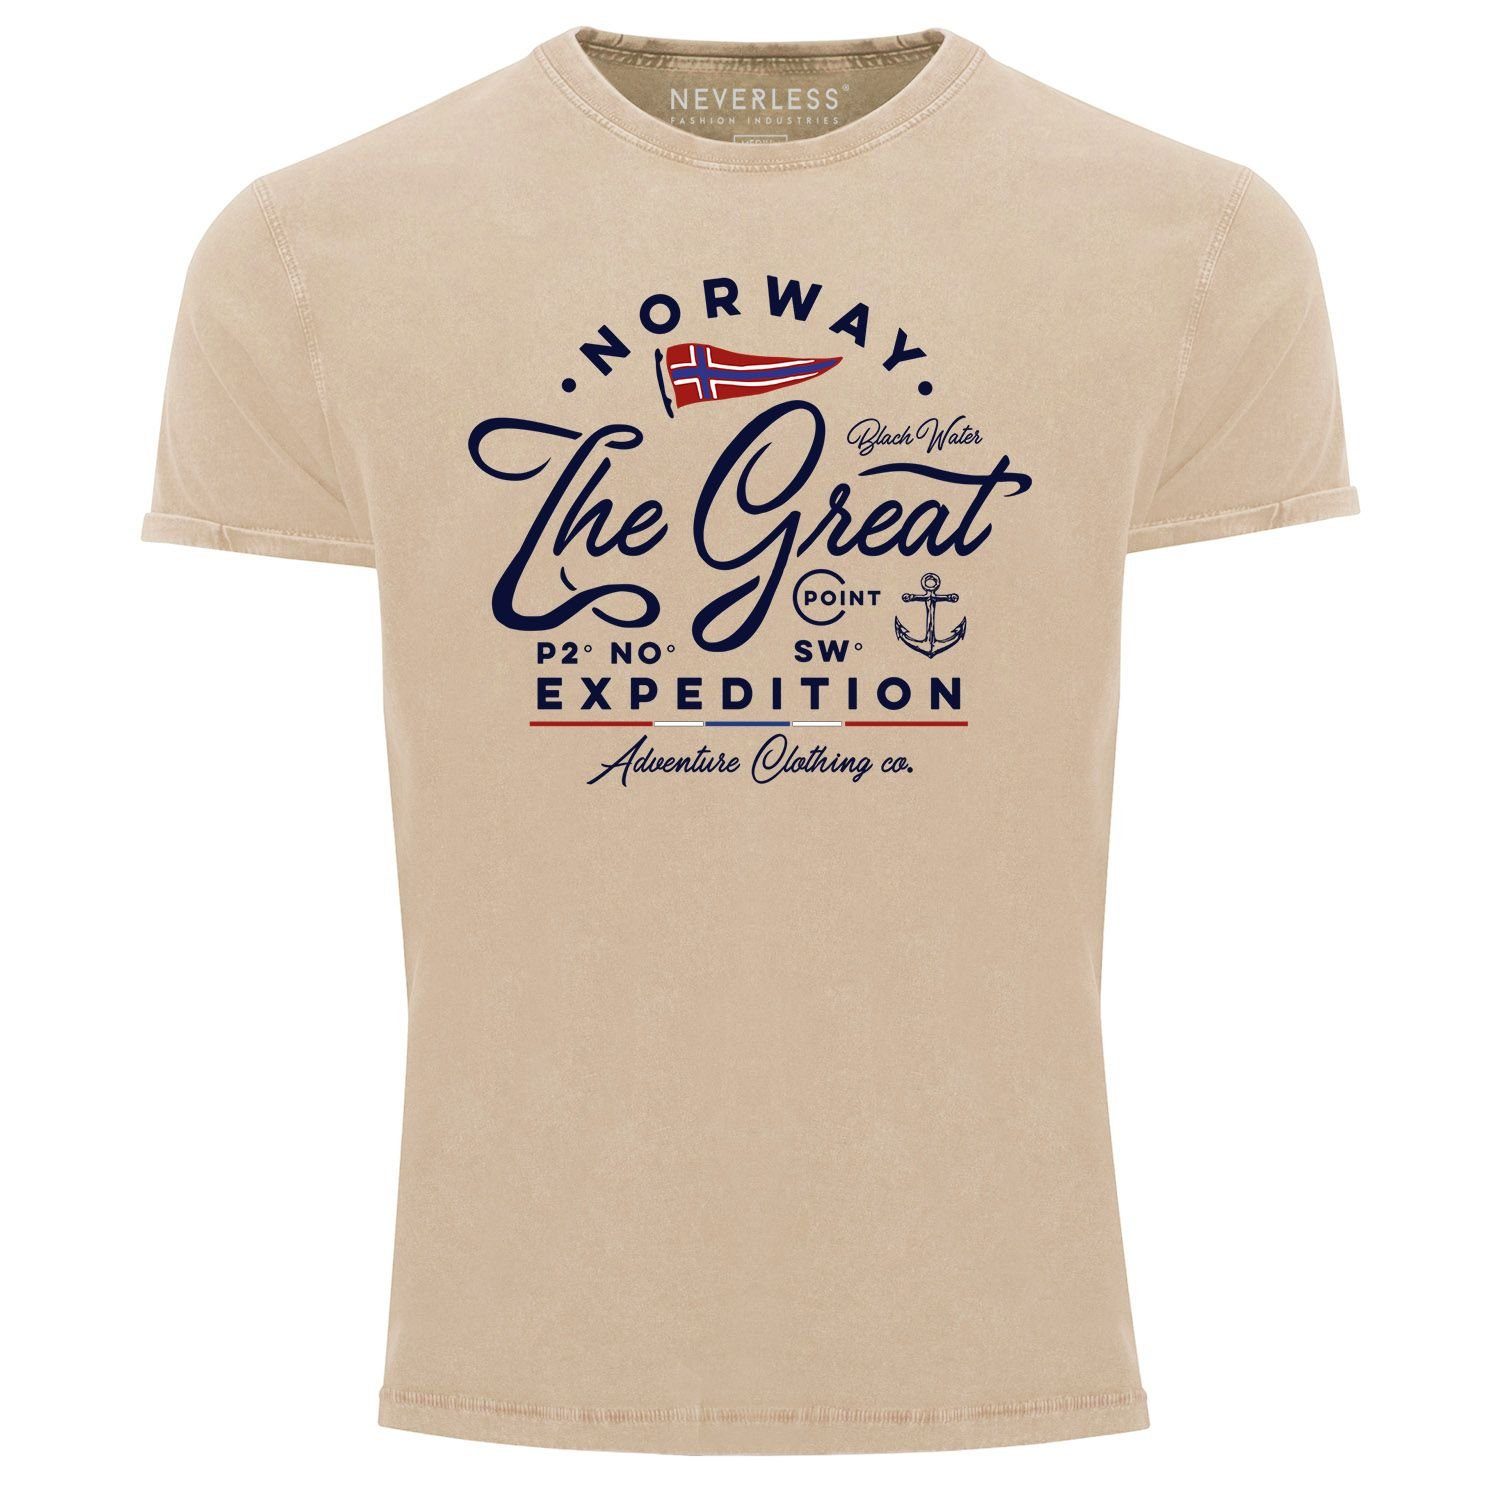 Neverless Print-Shirt Herren Vintage Shirt Norwegen The Great Expedition Outdoor Adventure Printshirt T-Shirt Aufdruck Used Look Neverless® mit Print natur | T-Shirts